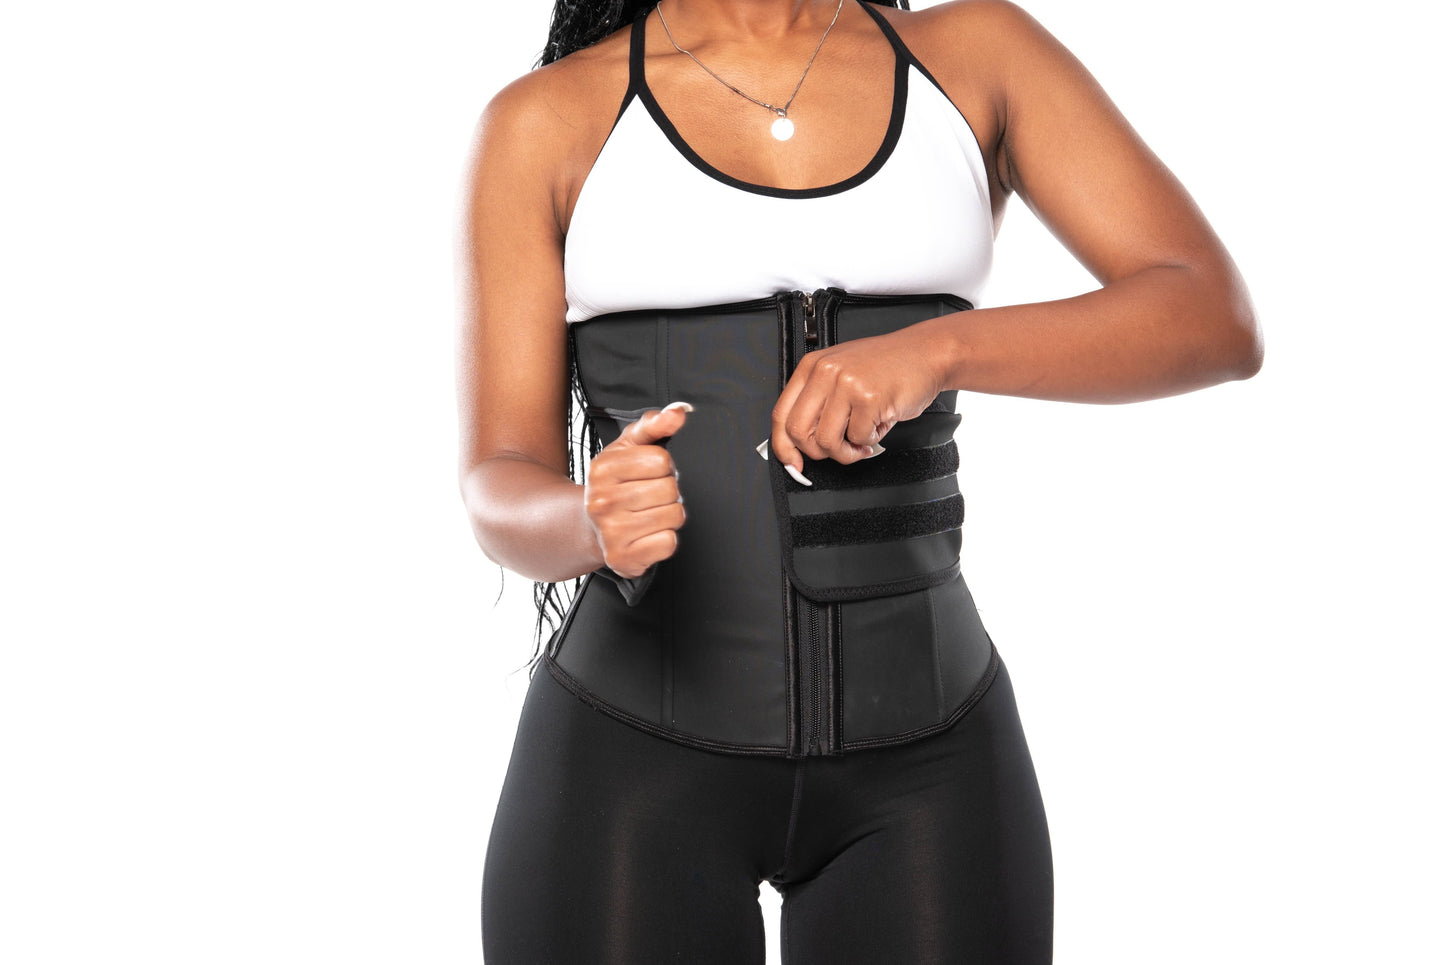 Long torso” NEW Pro fitness belt